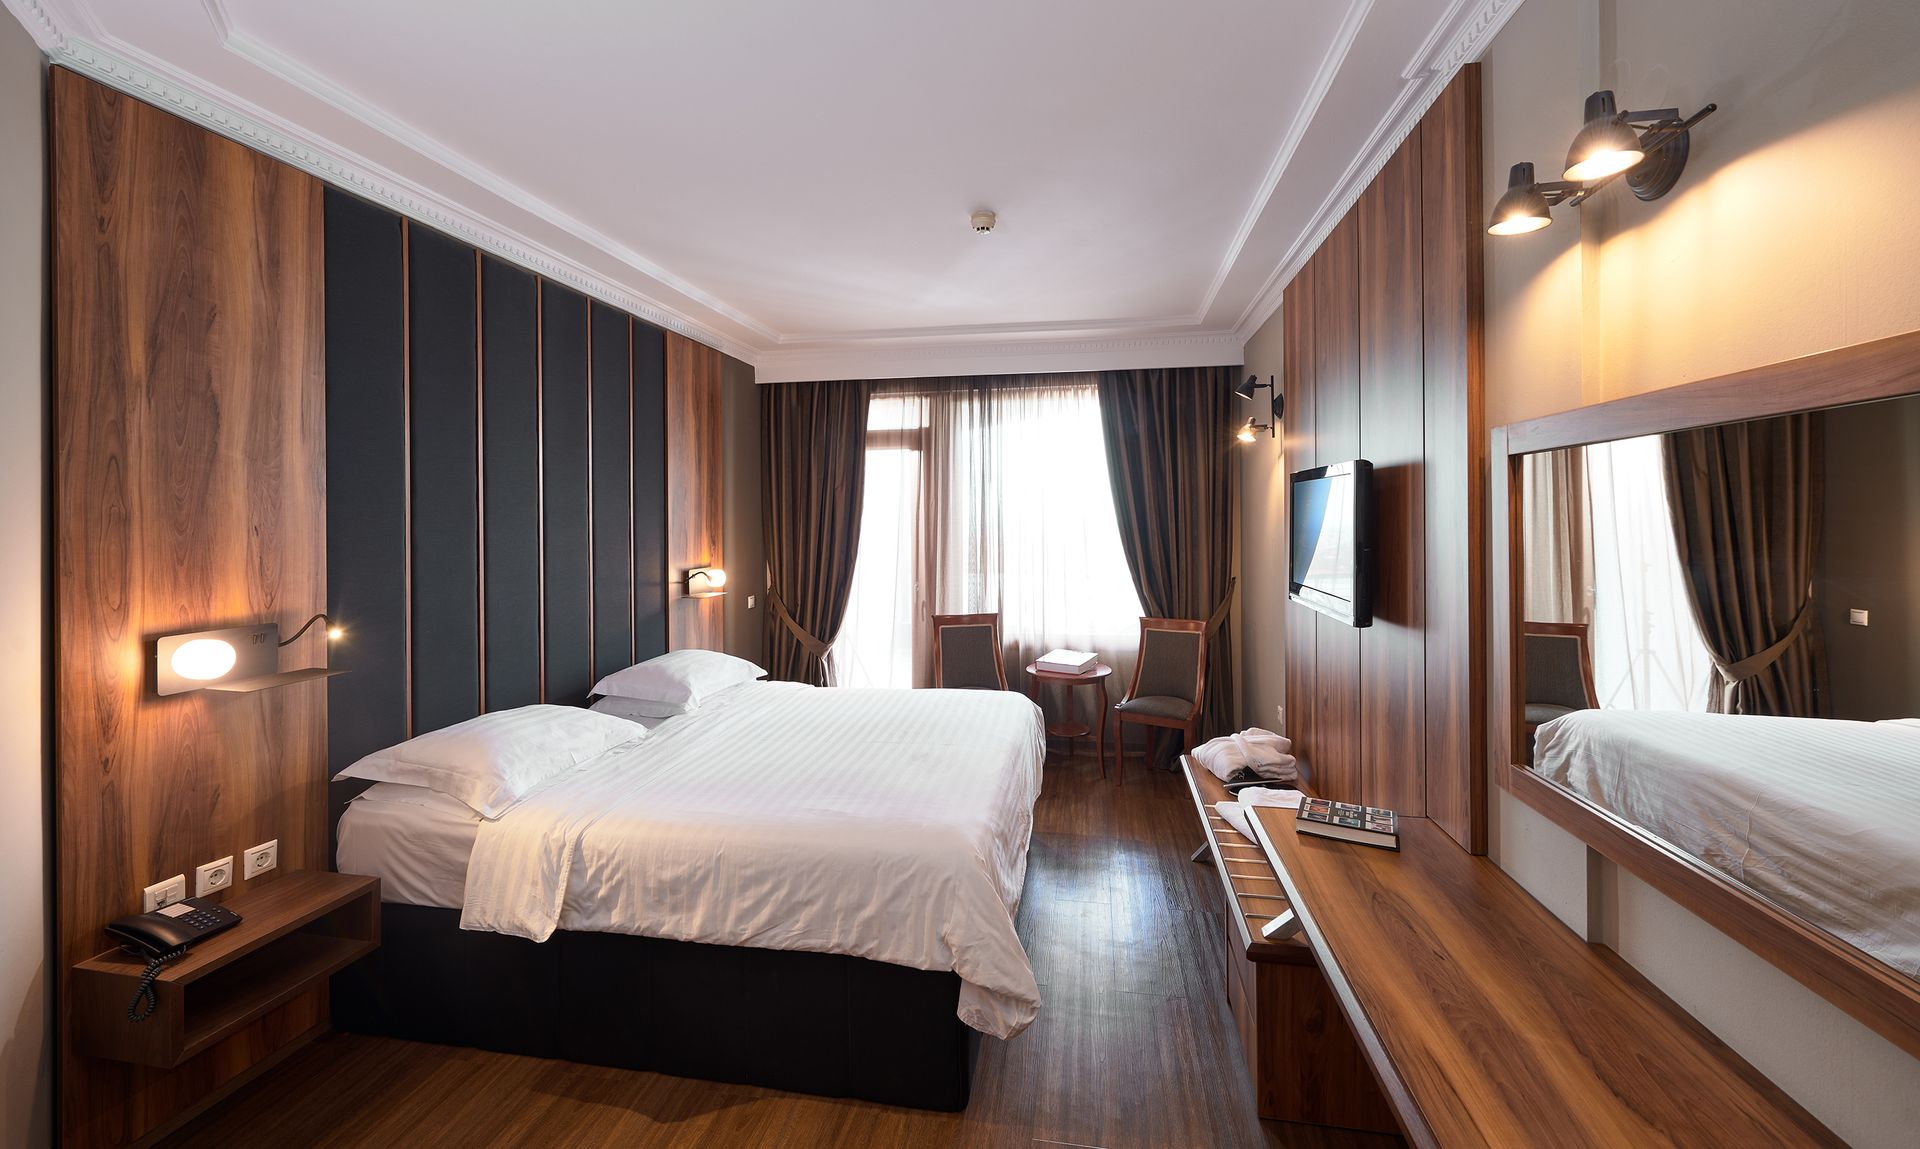 4* Royal Hotel - Περαία, Θεσσαλονίκη ✦ 2 Ημέρες (1 Διανυκτέρευση) ✦ 2 άτομα ✦ Πρωινό ✦ έως 30/09/2022 ✦ Φανταστική Τοποθεσία!